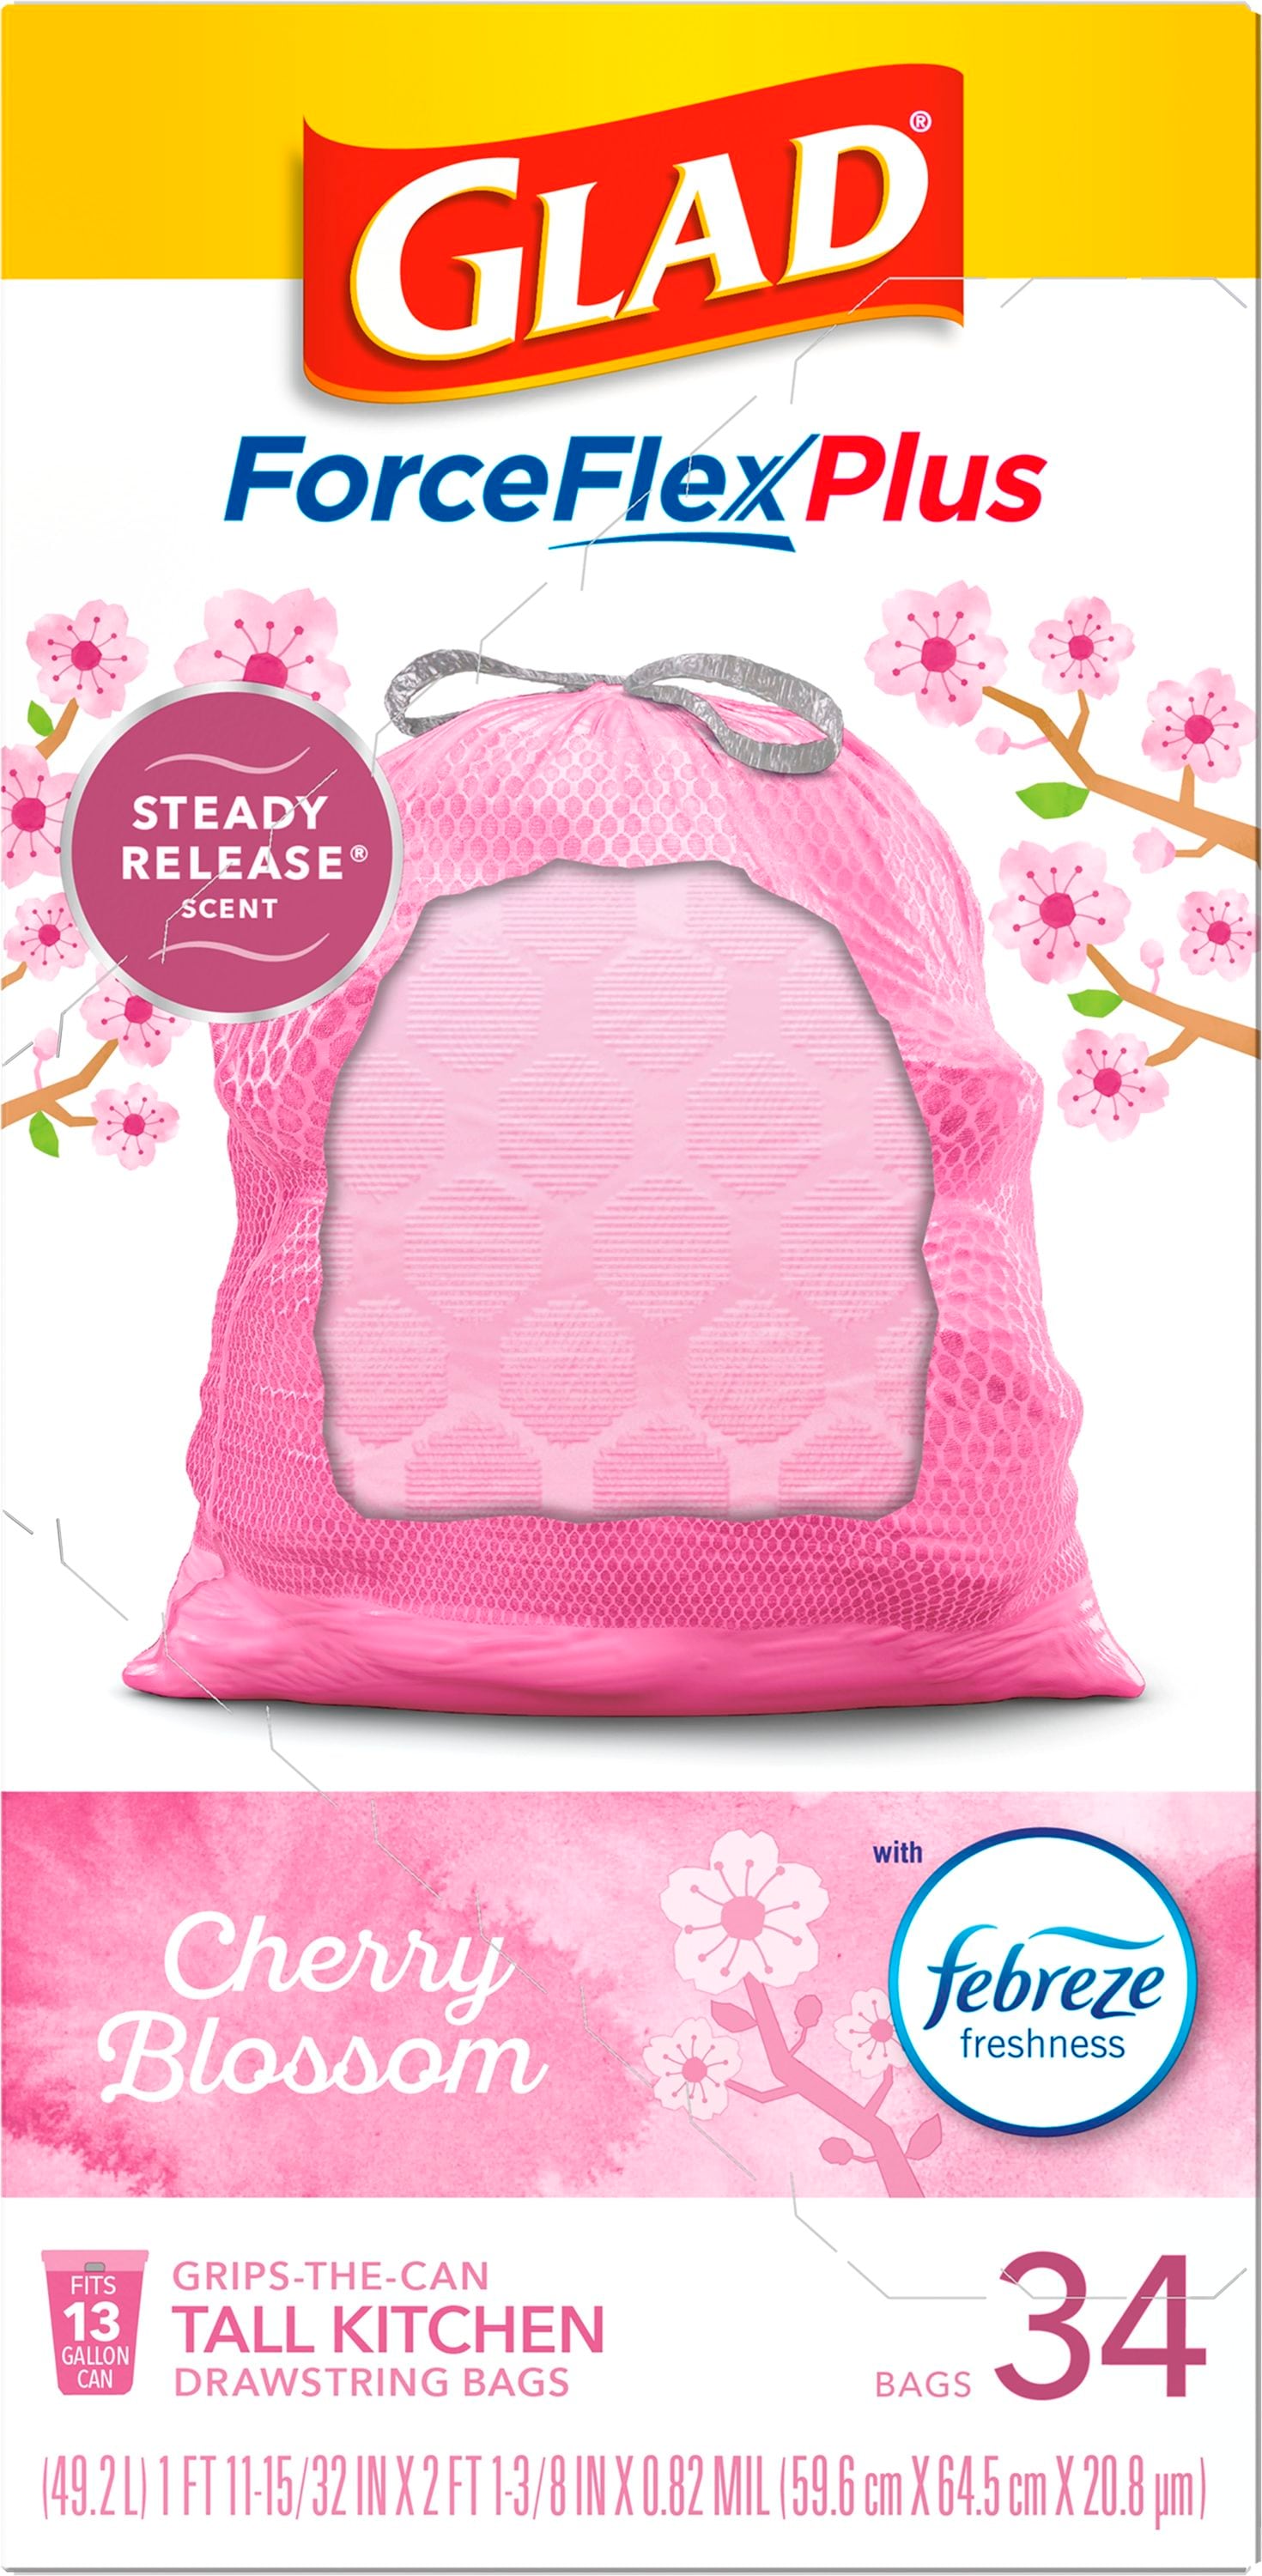 Glad ForceFlexPlus Febreze Cherry Blossom Tall Kitchen Drawstring 13 Gallon Trash  Bags - 34 Count - Safeway